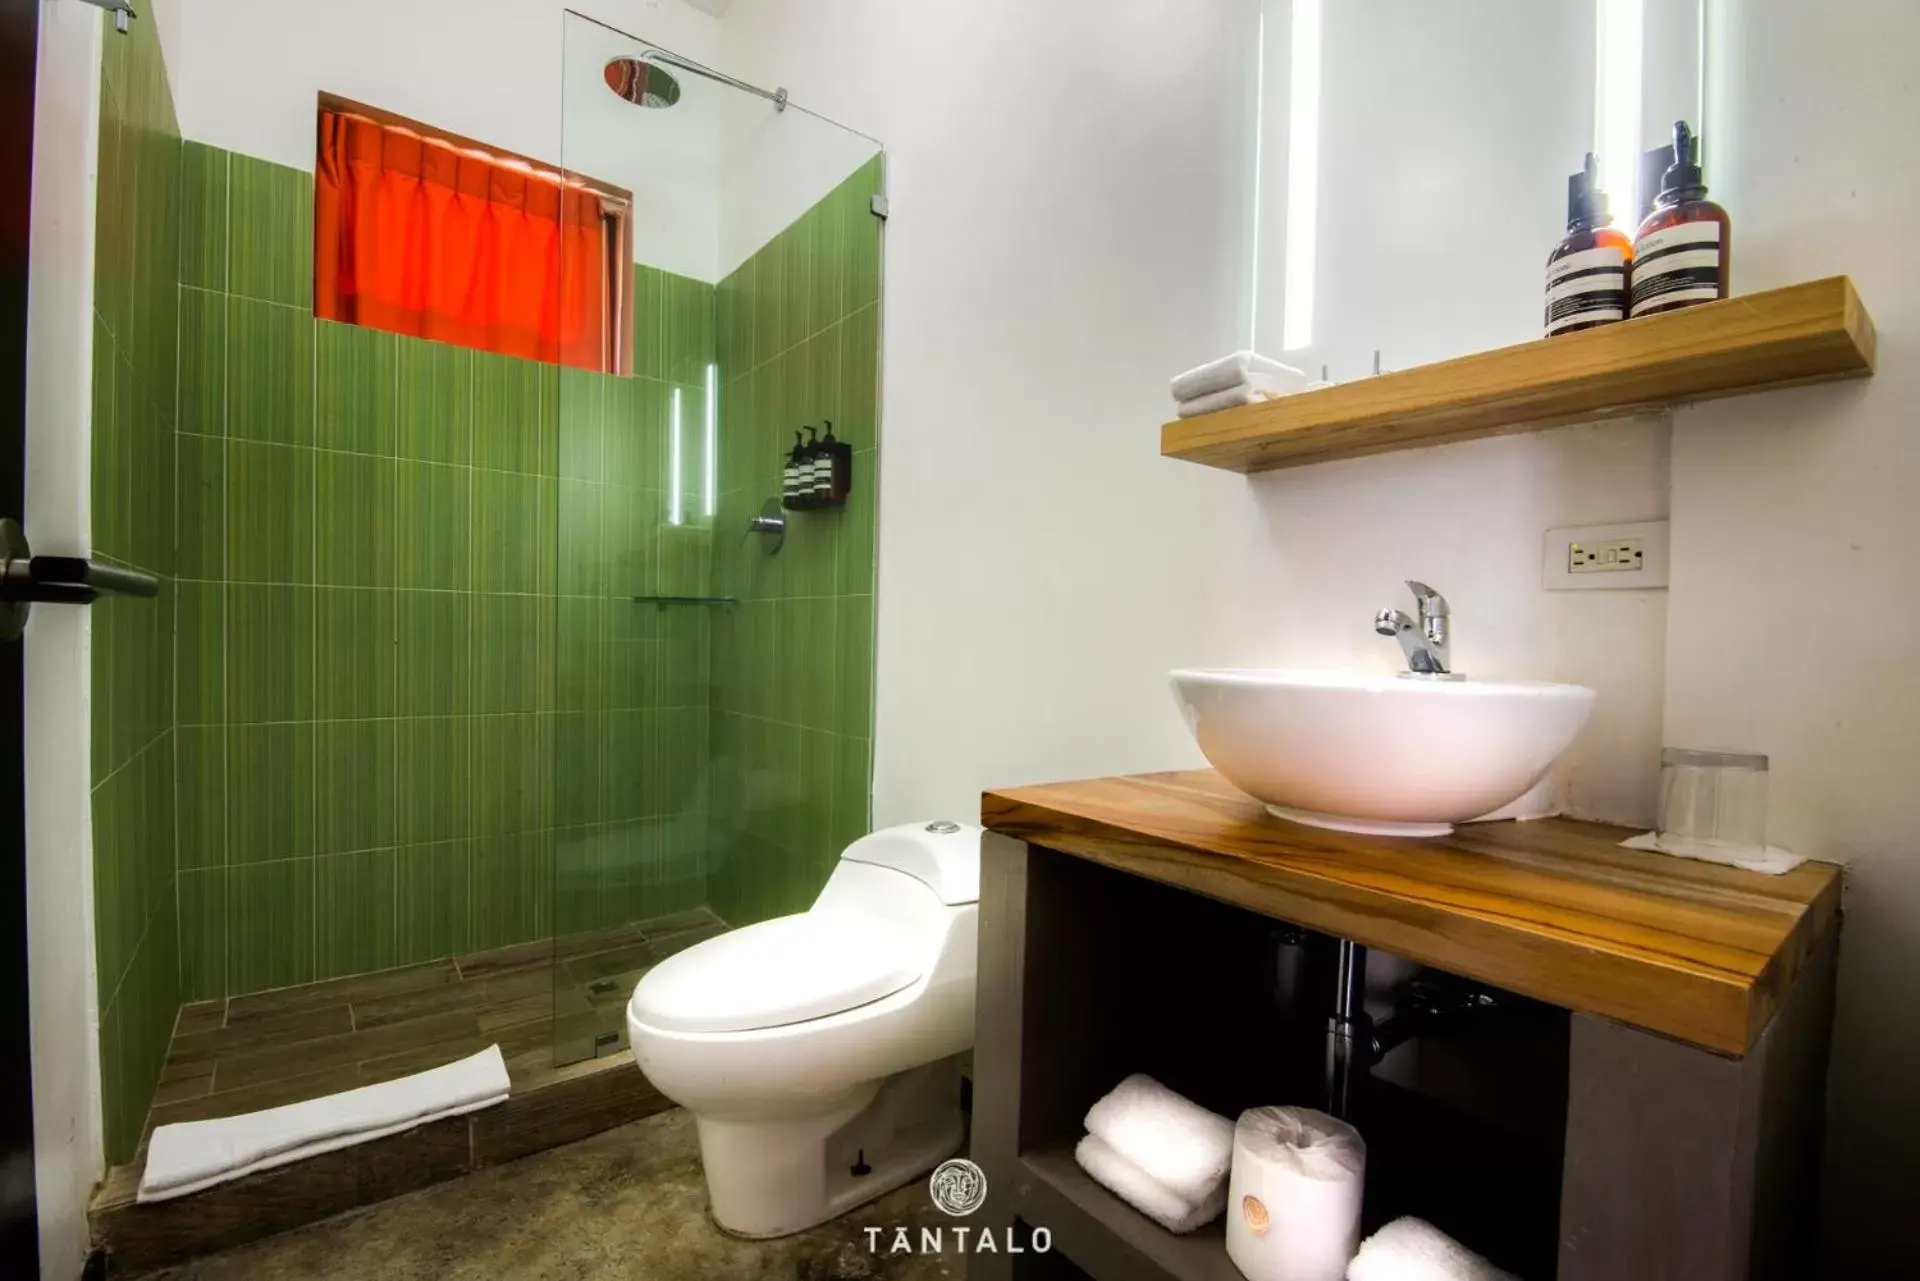 Bathroom in Tantalo Hotel - Kitchen - Roofbar